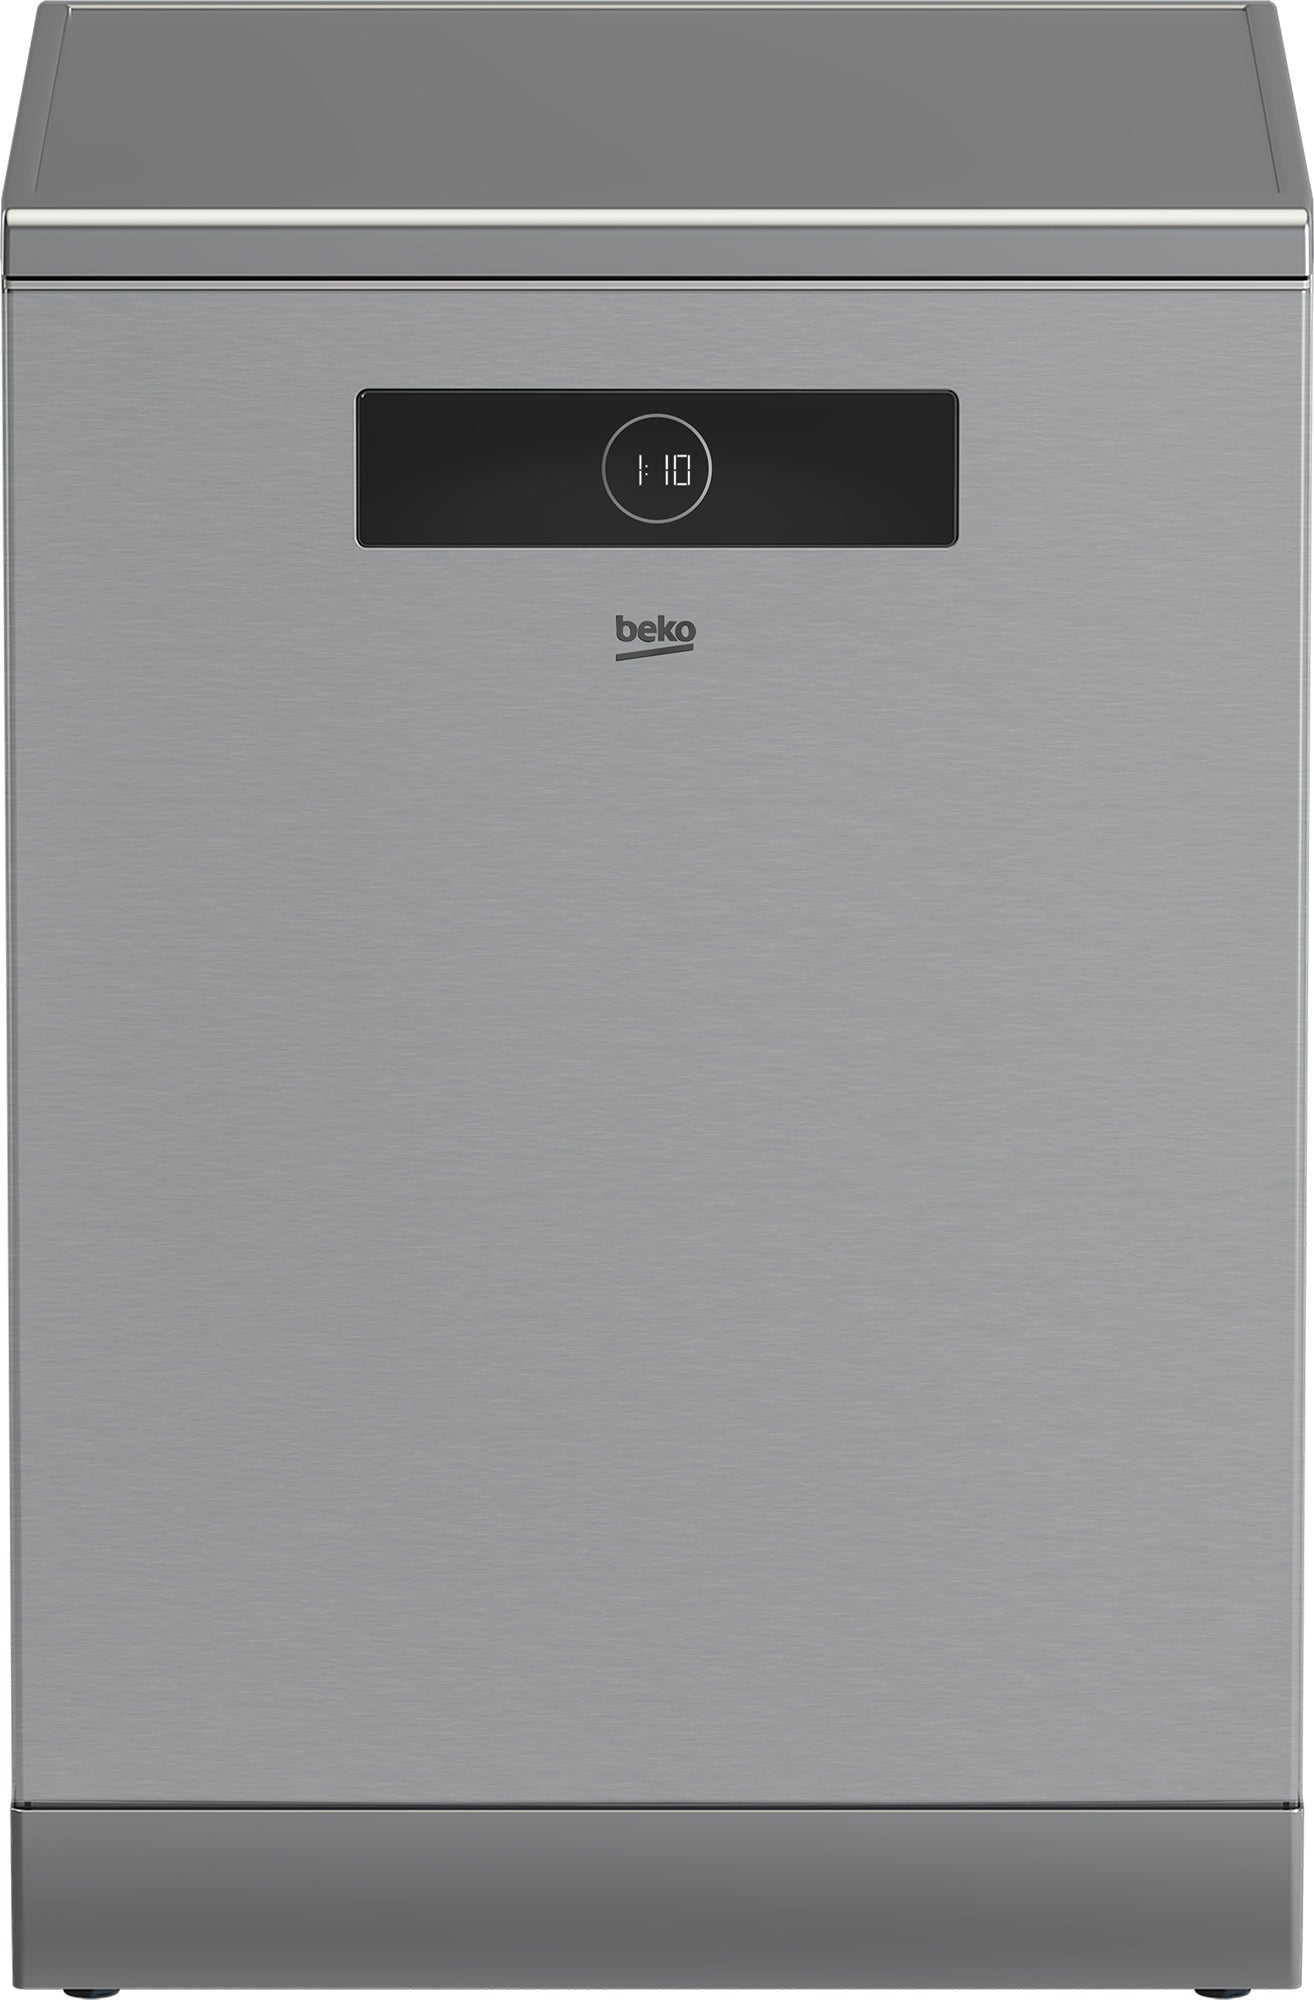 BDEN38523XQ / Beko Dishwasher, 15 set, 8 Programs, 4 Sprays, A++, Steel 4 / A++ / 8